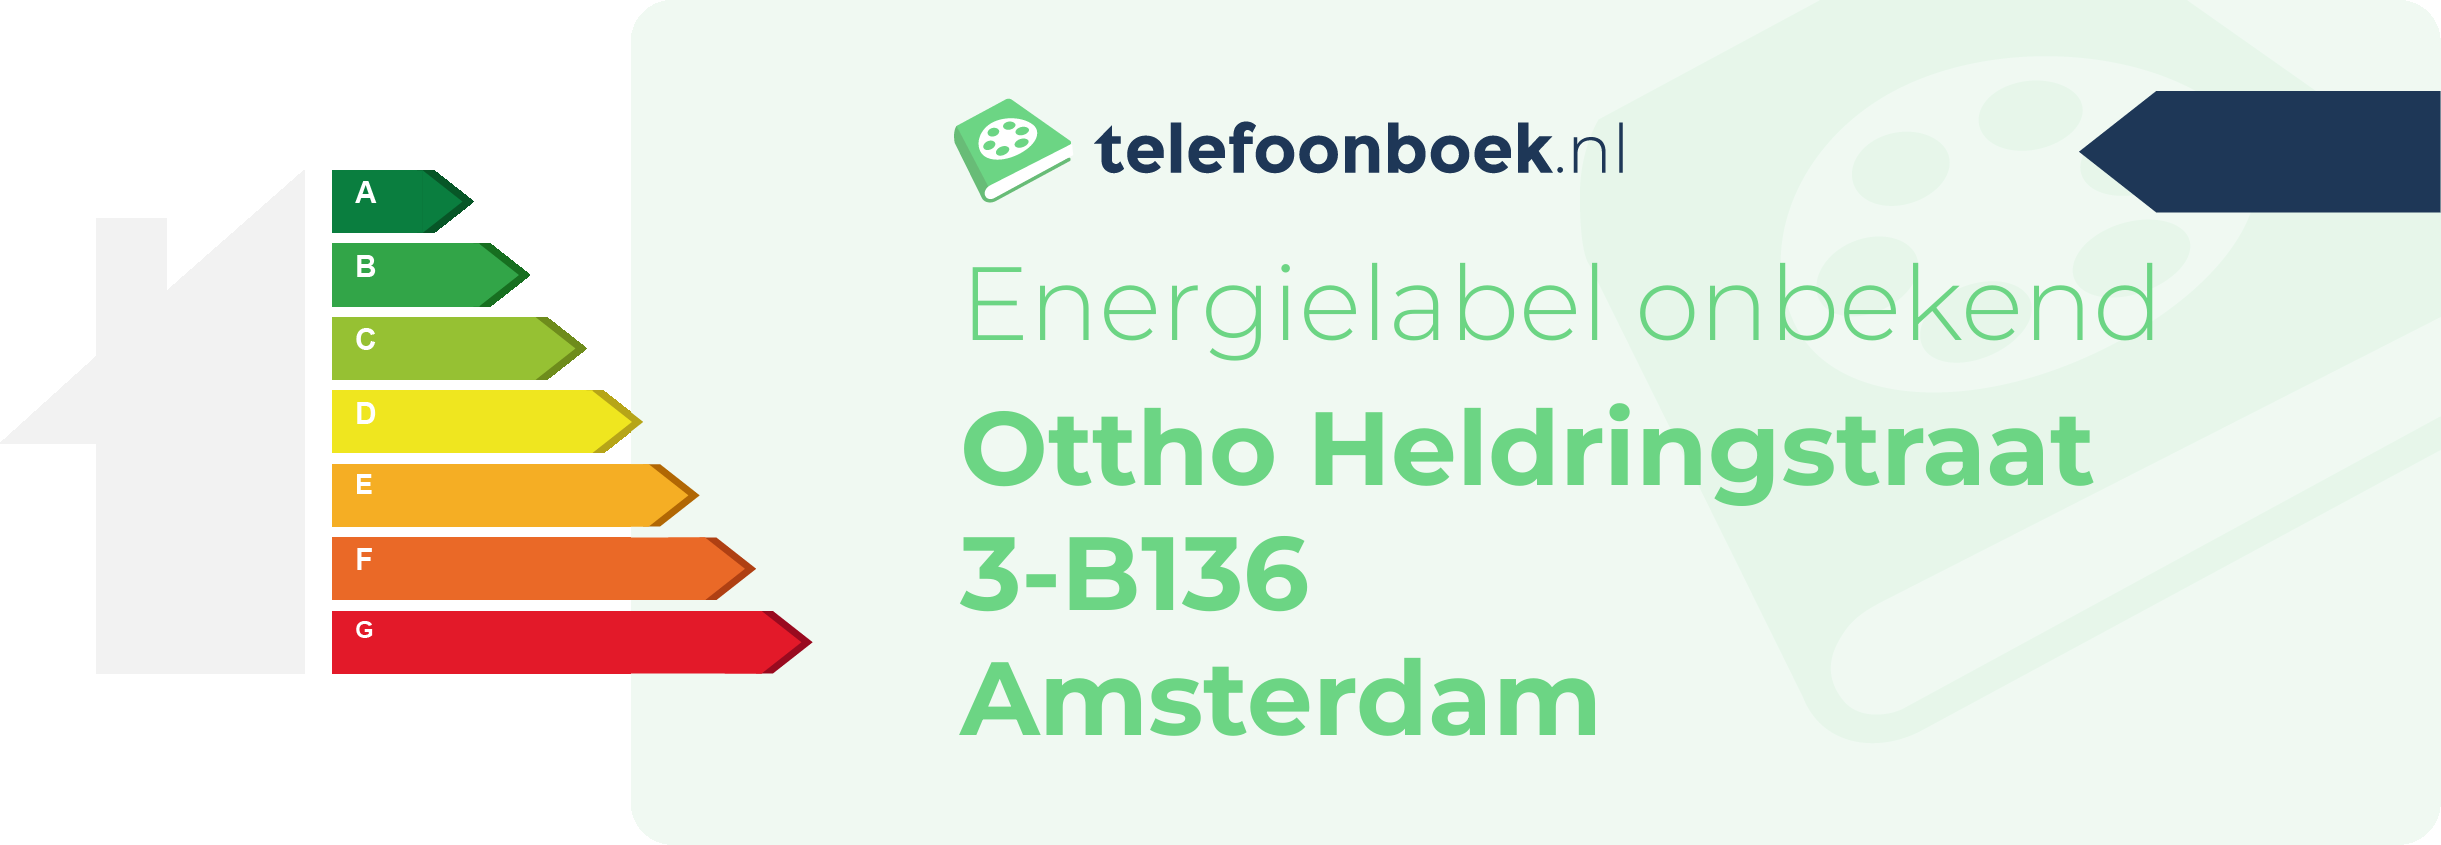 Energielabel Ottho Heldringstraat 3-B136 Amsterdam